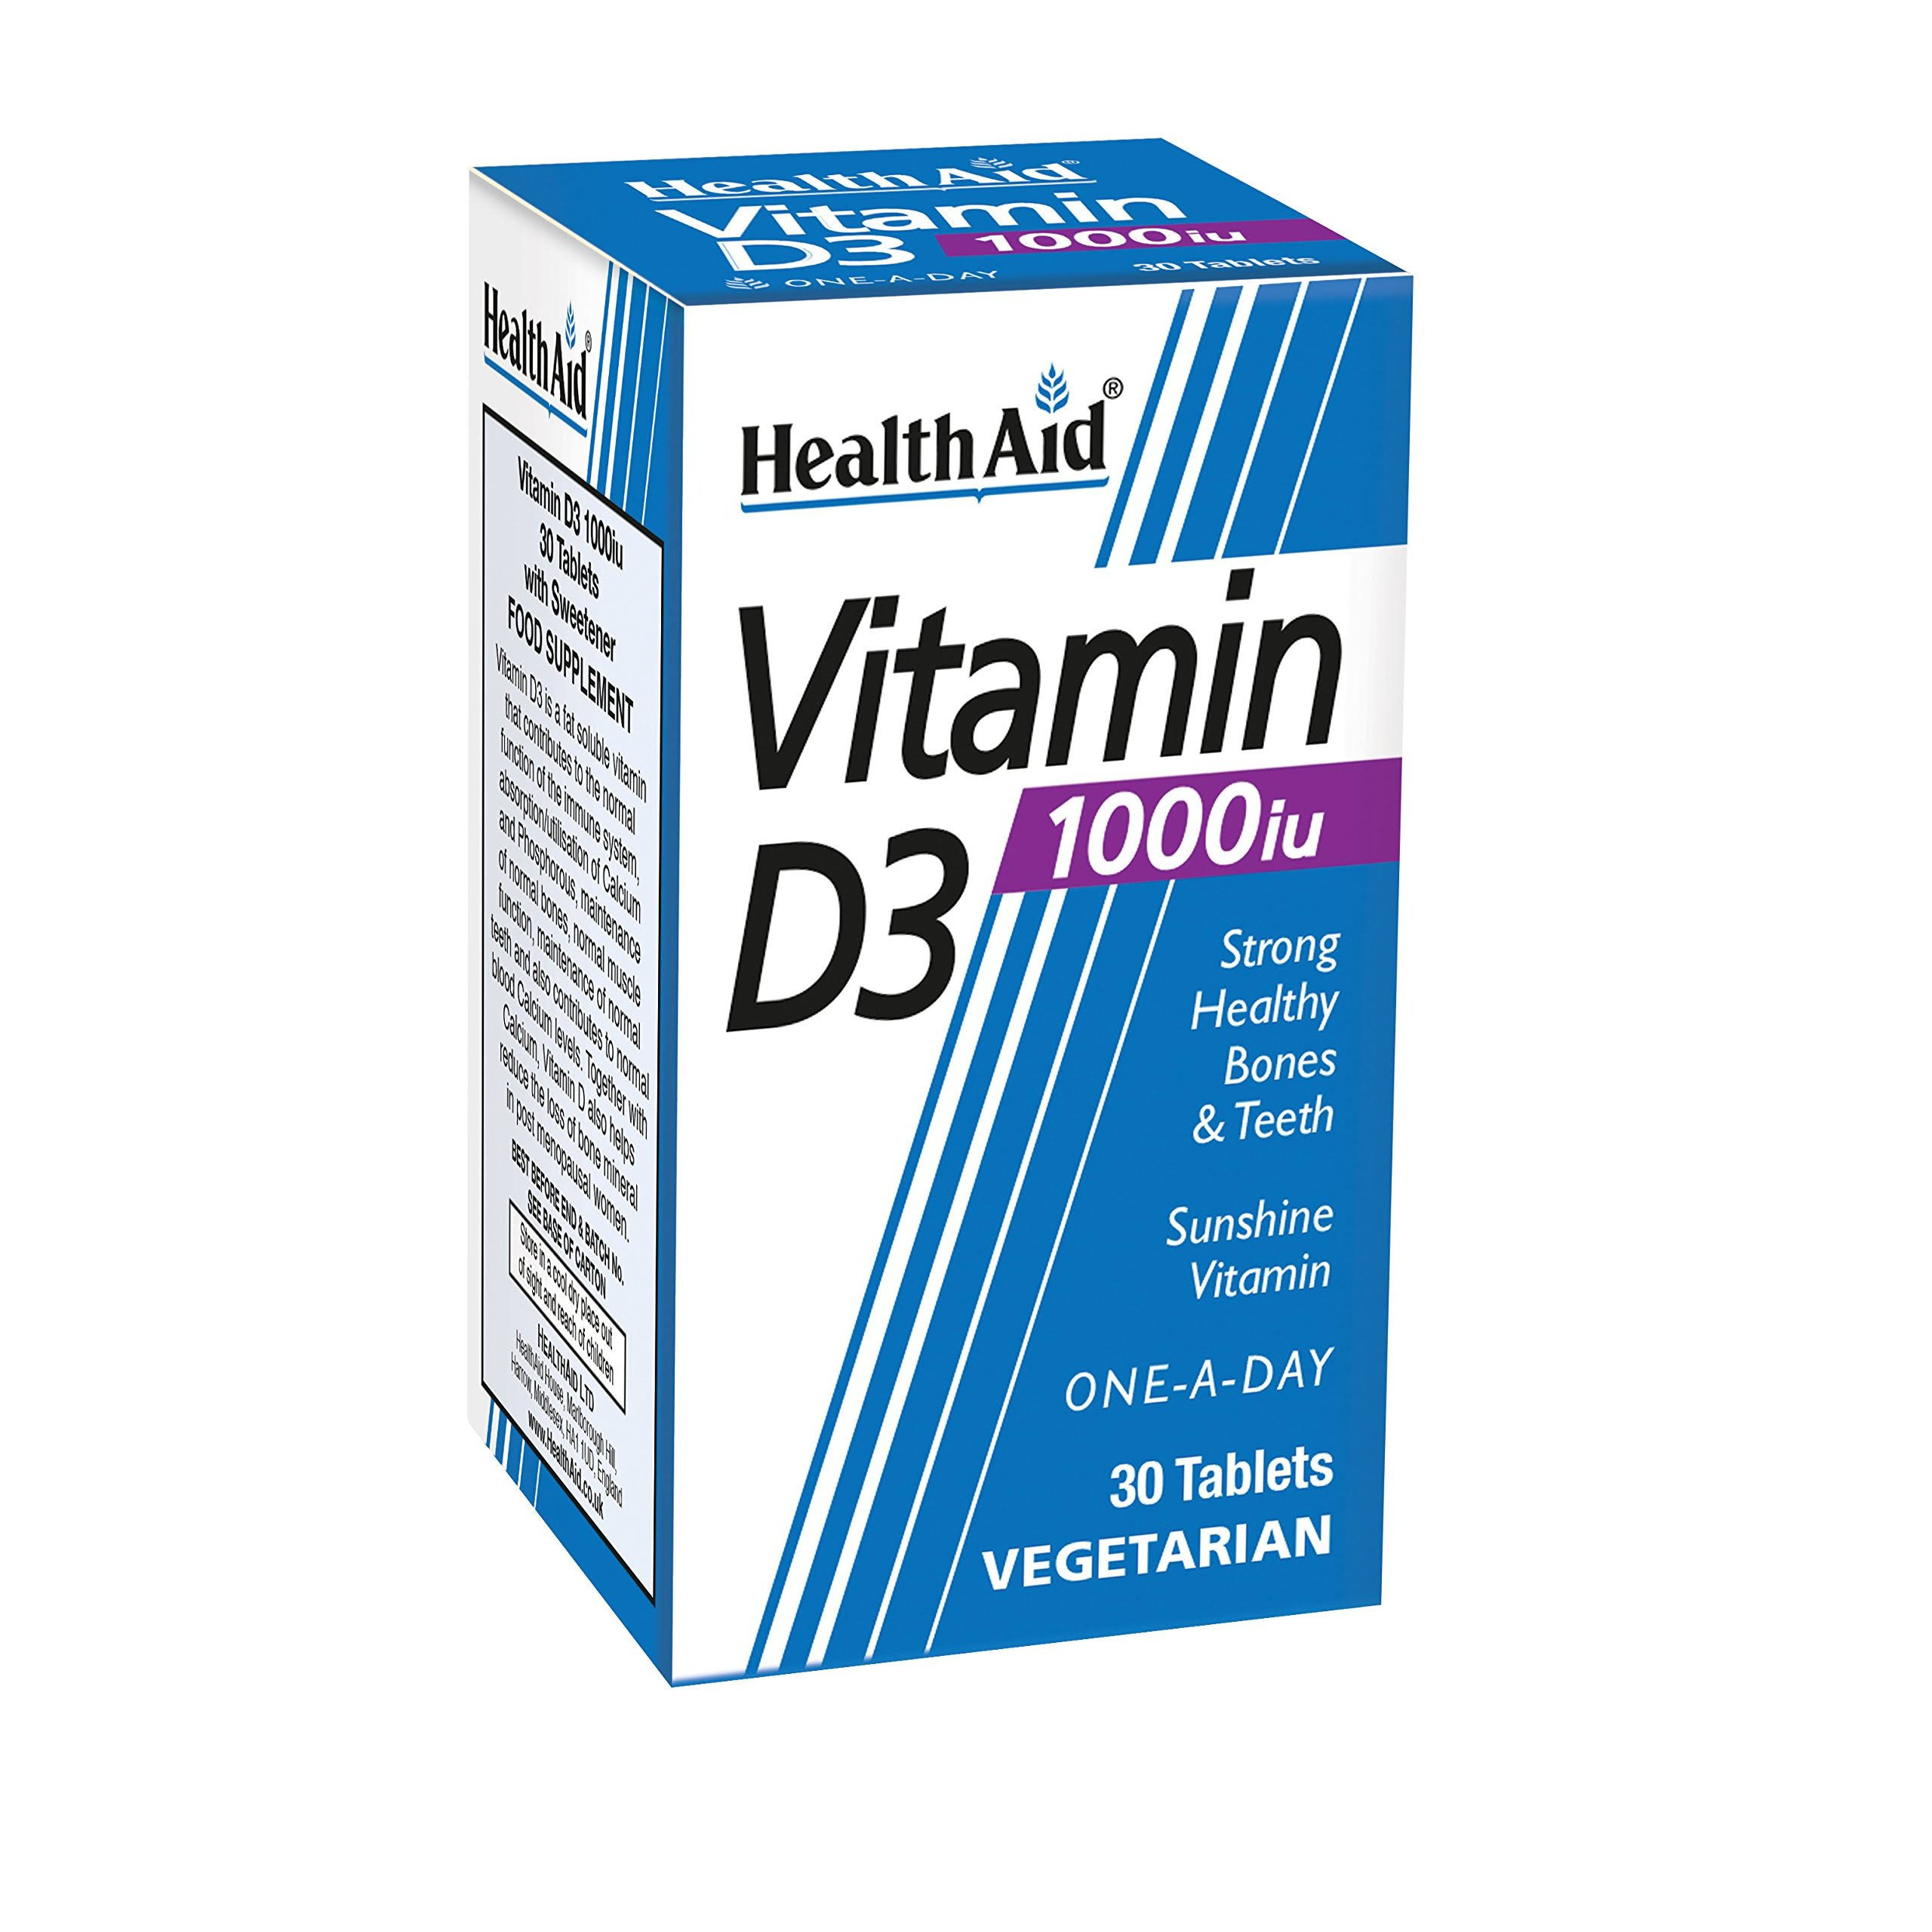 Health Aid Vitamin D3 1000iu Tablets - 30 Pack